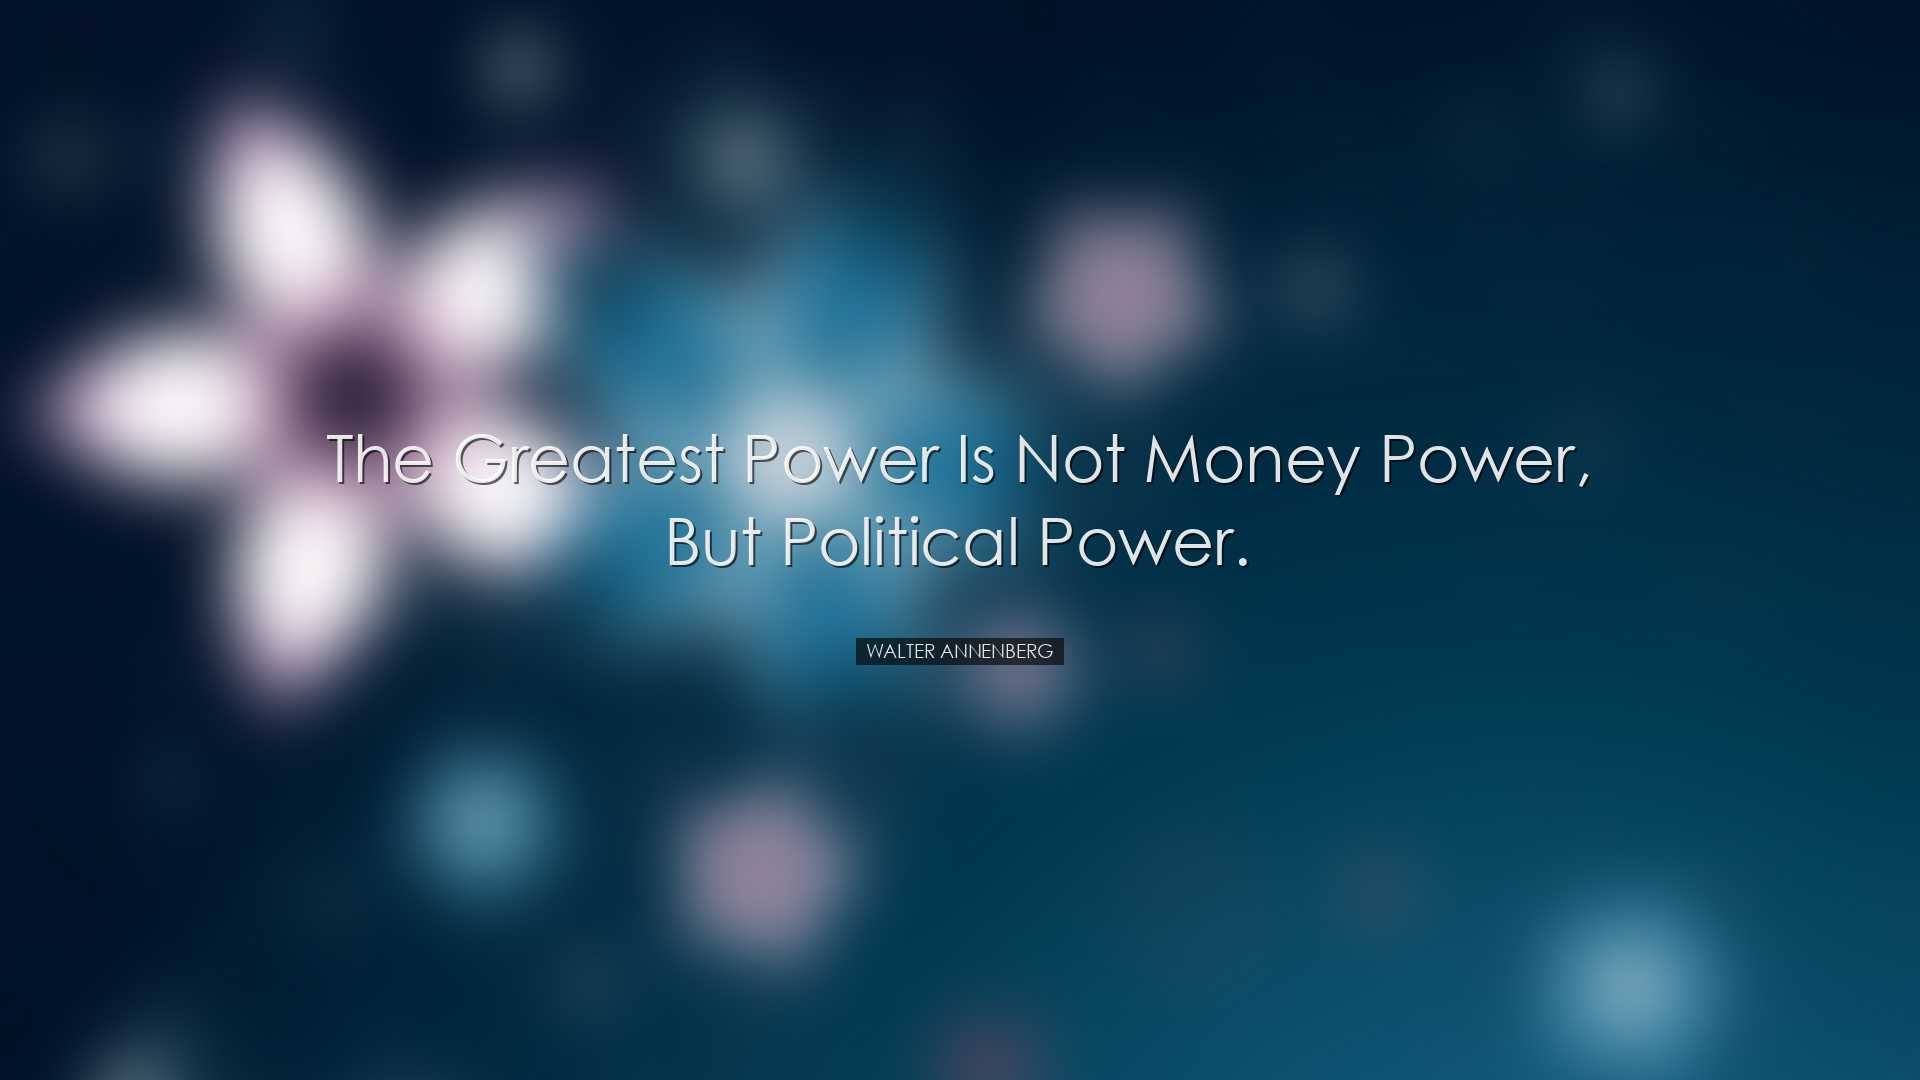 The greatest power is not money power, but political power. - Walt